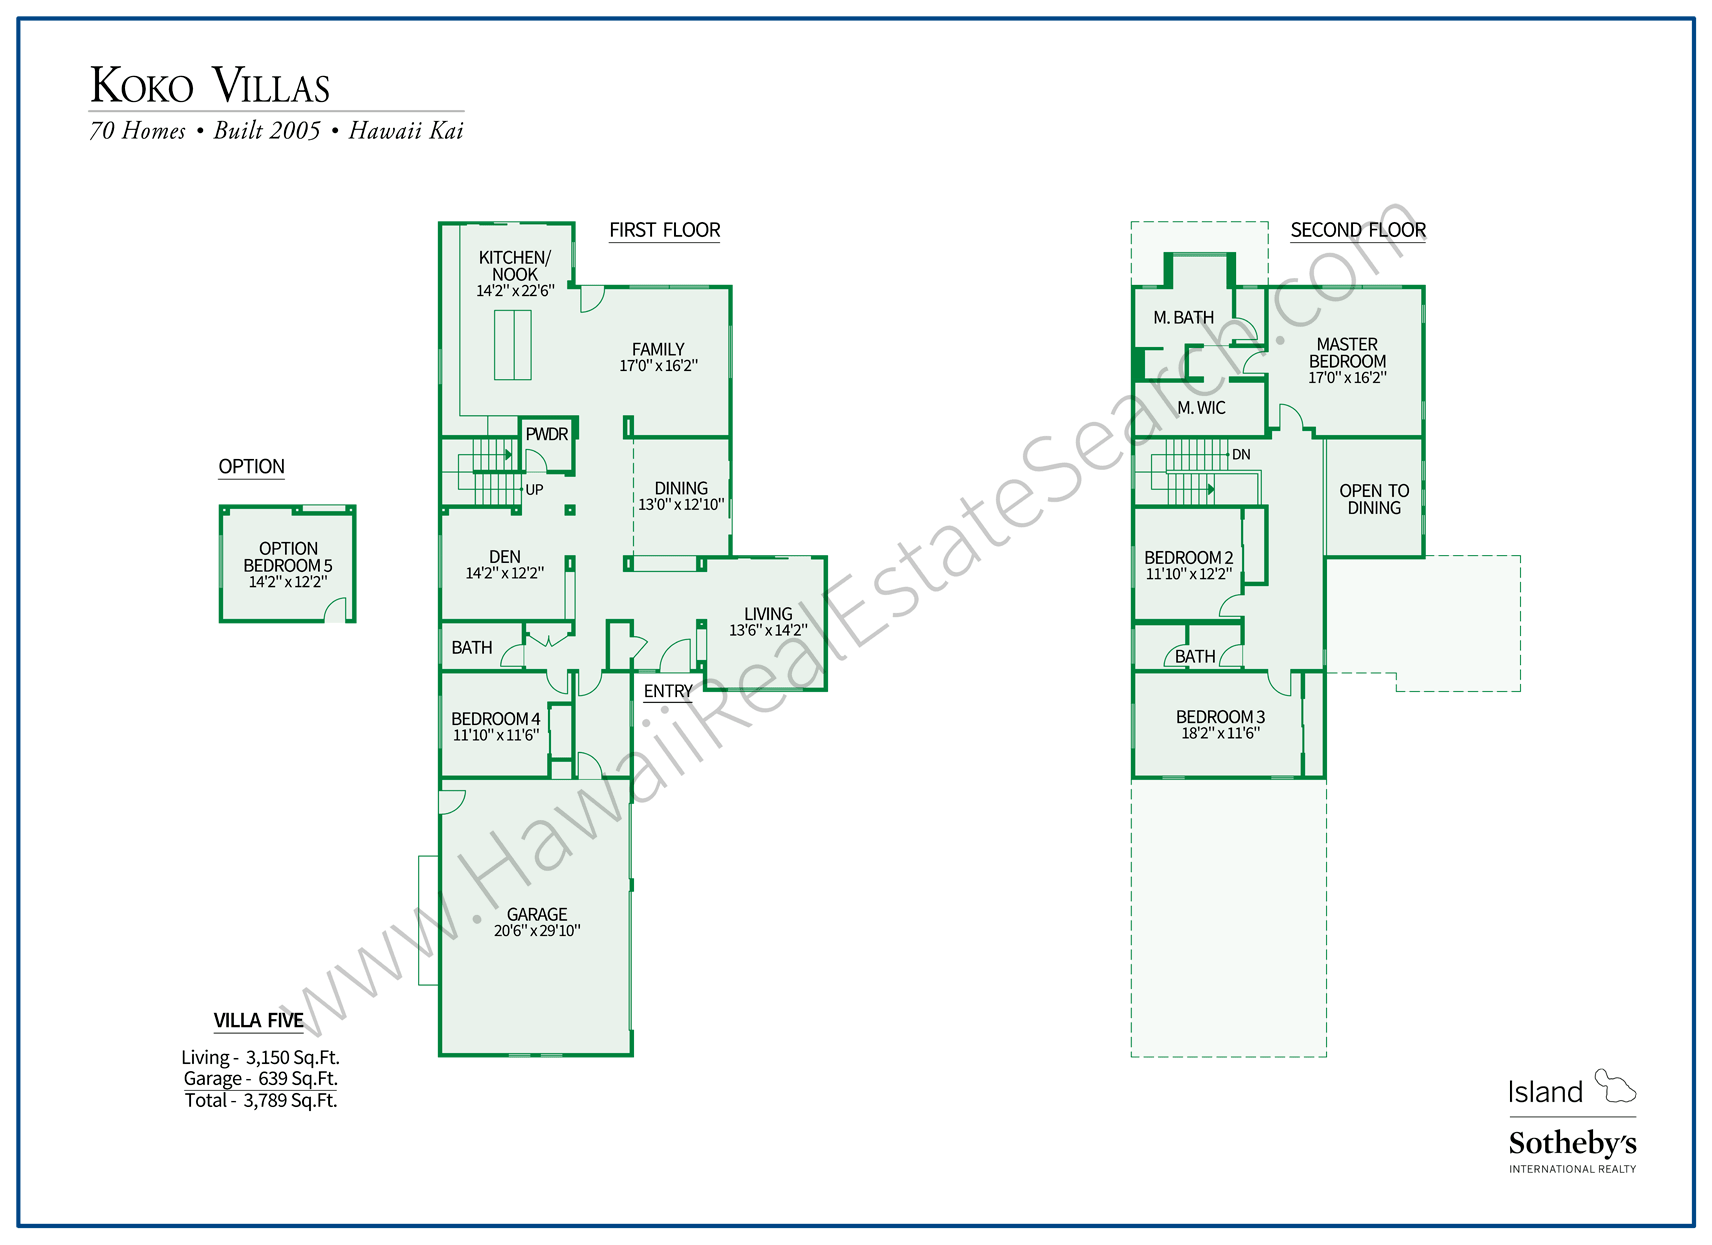 Koko Villas Floor Plan 5